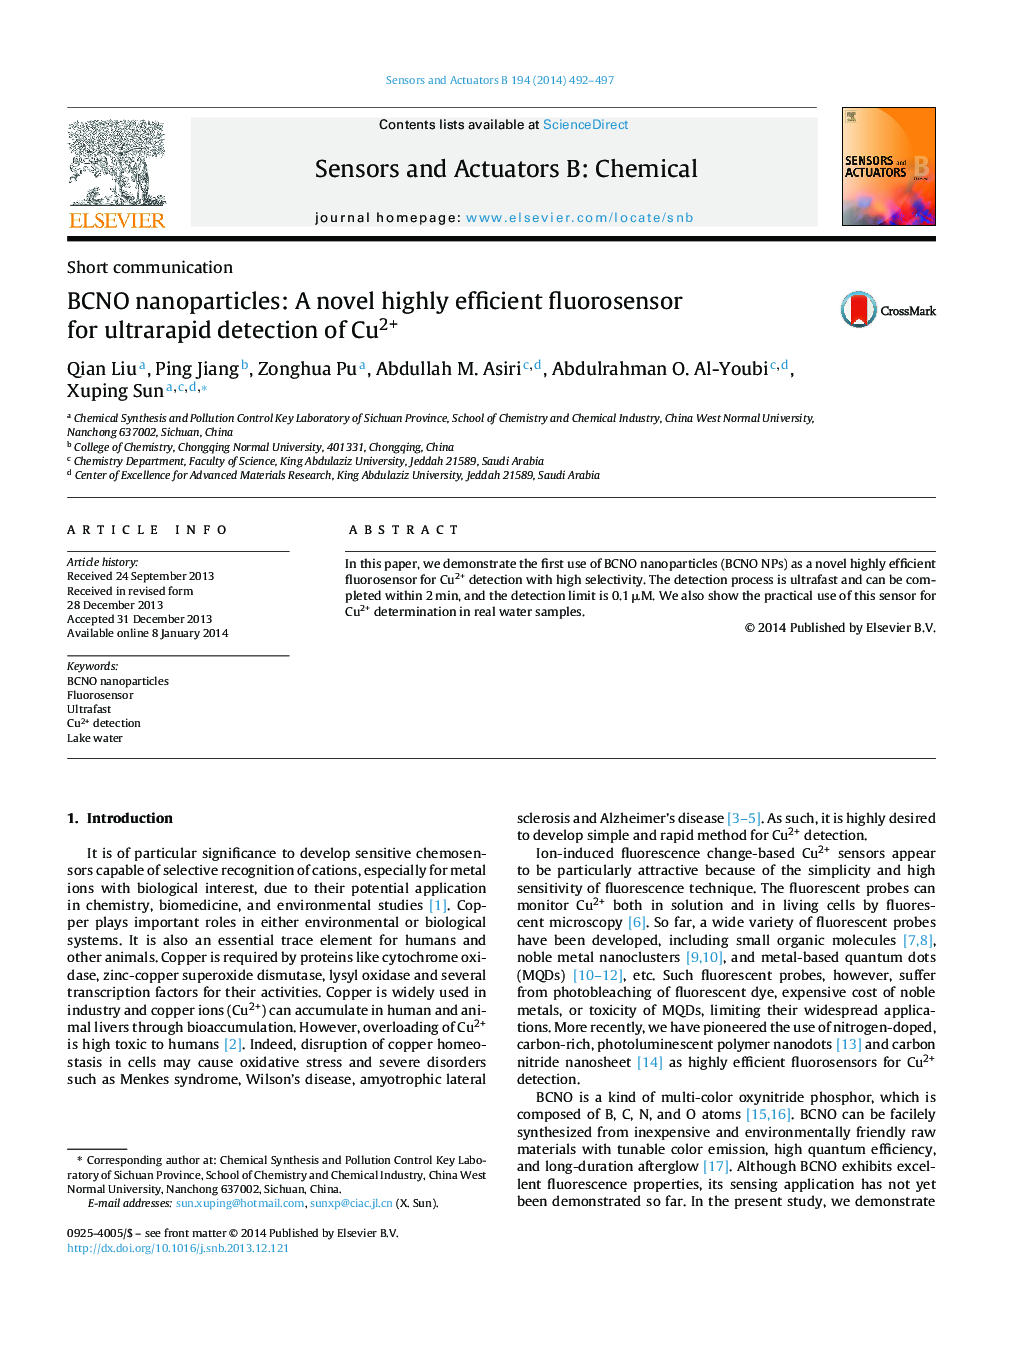 BCNO nanoparticles: A novel highly efficient fluorosensor for ultrarapid detection of Cu2+